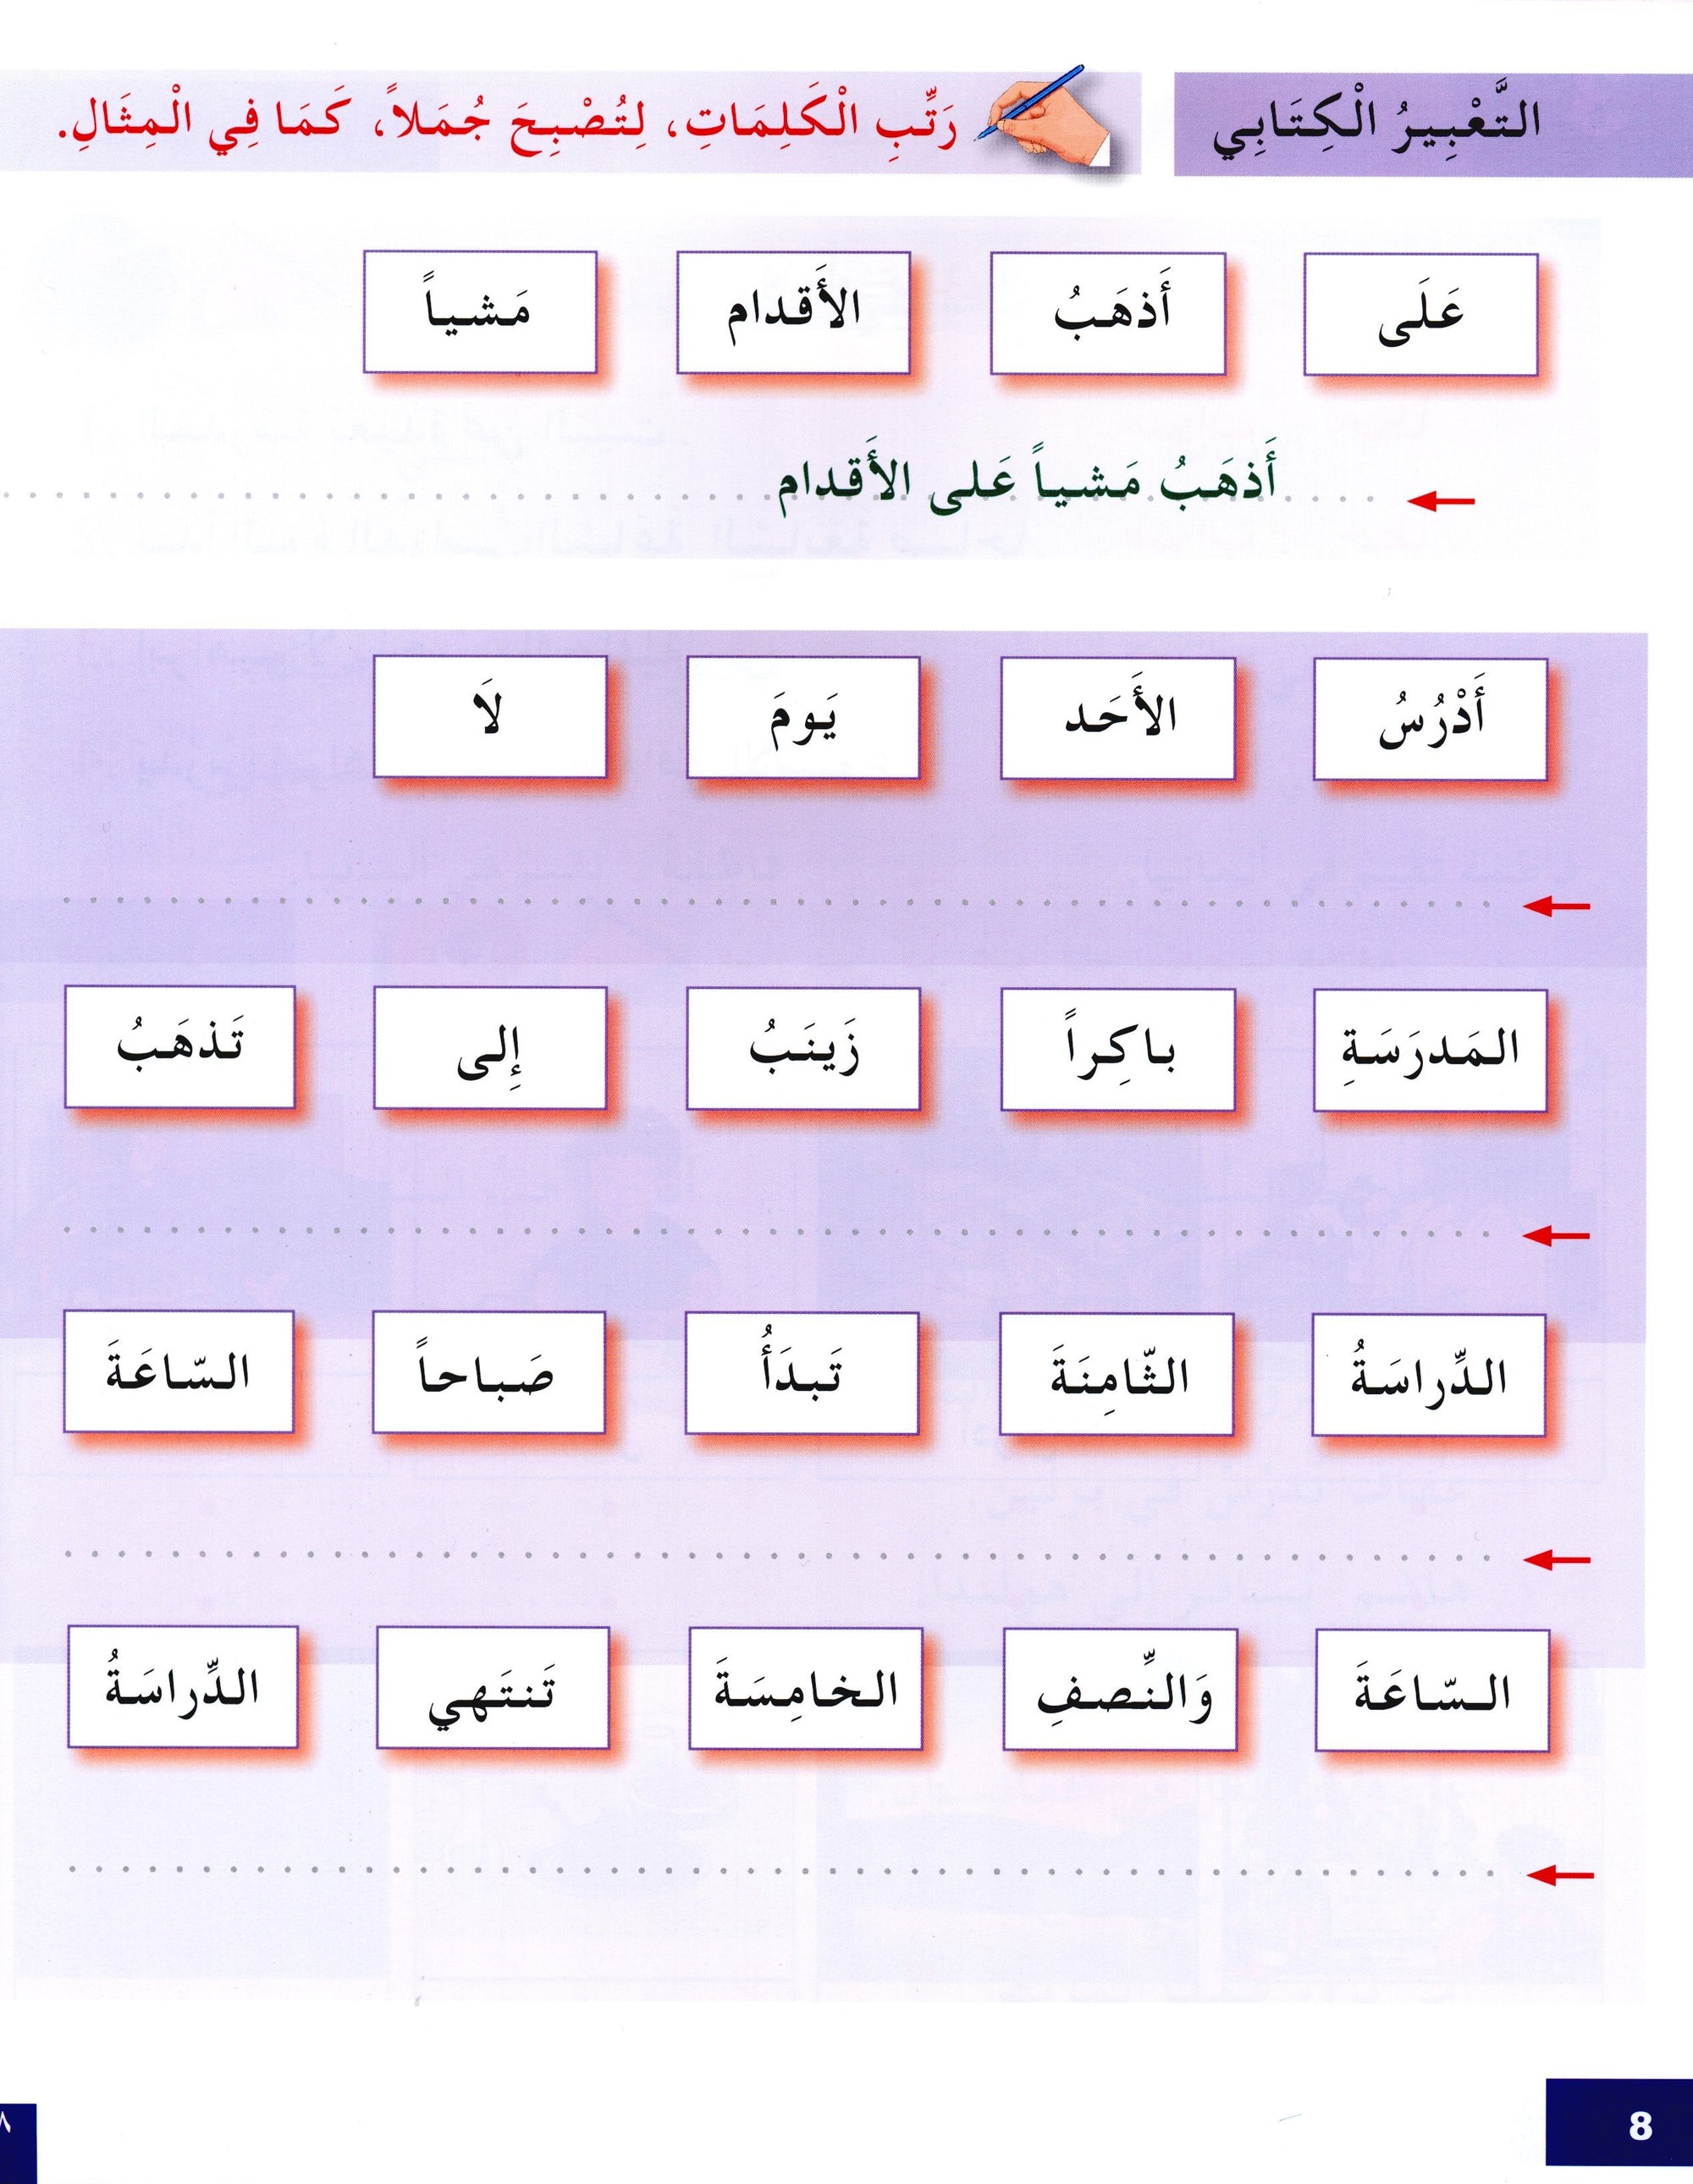 I Learn Arabic Simplified Curriculum Workbook Level 3 أتعلم العربية المنهج الميسر كتاب التمارين